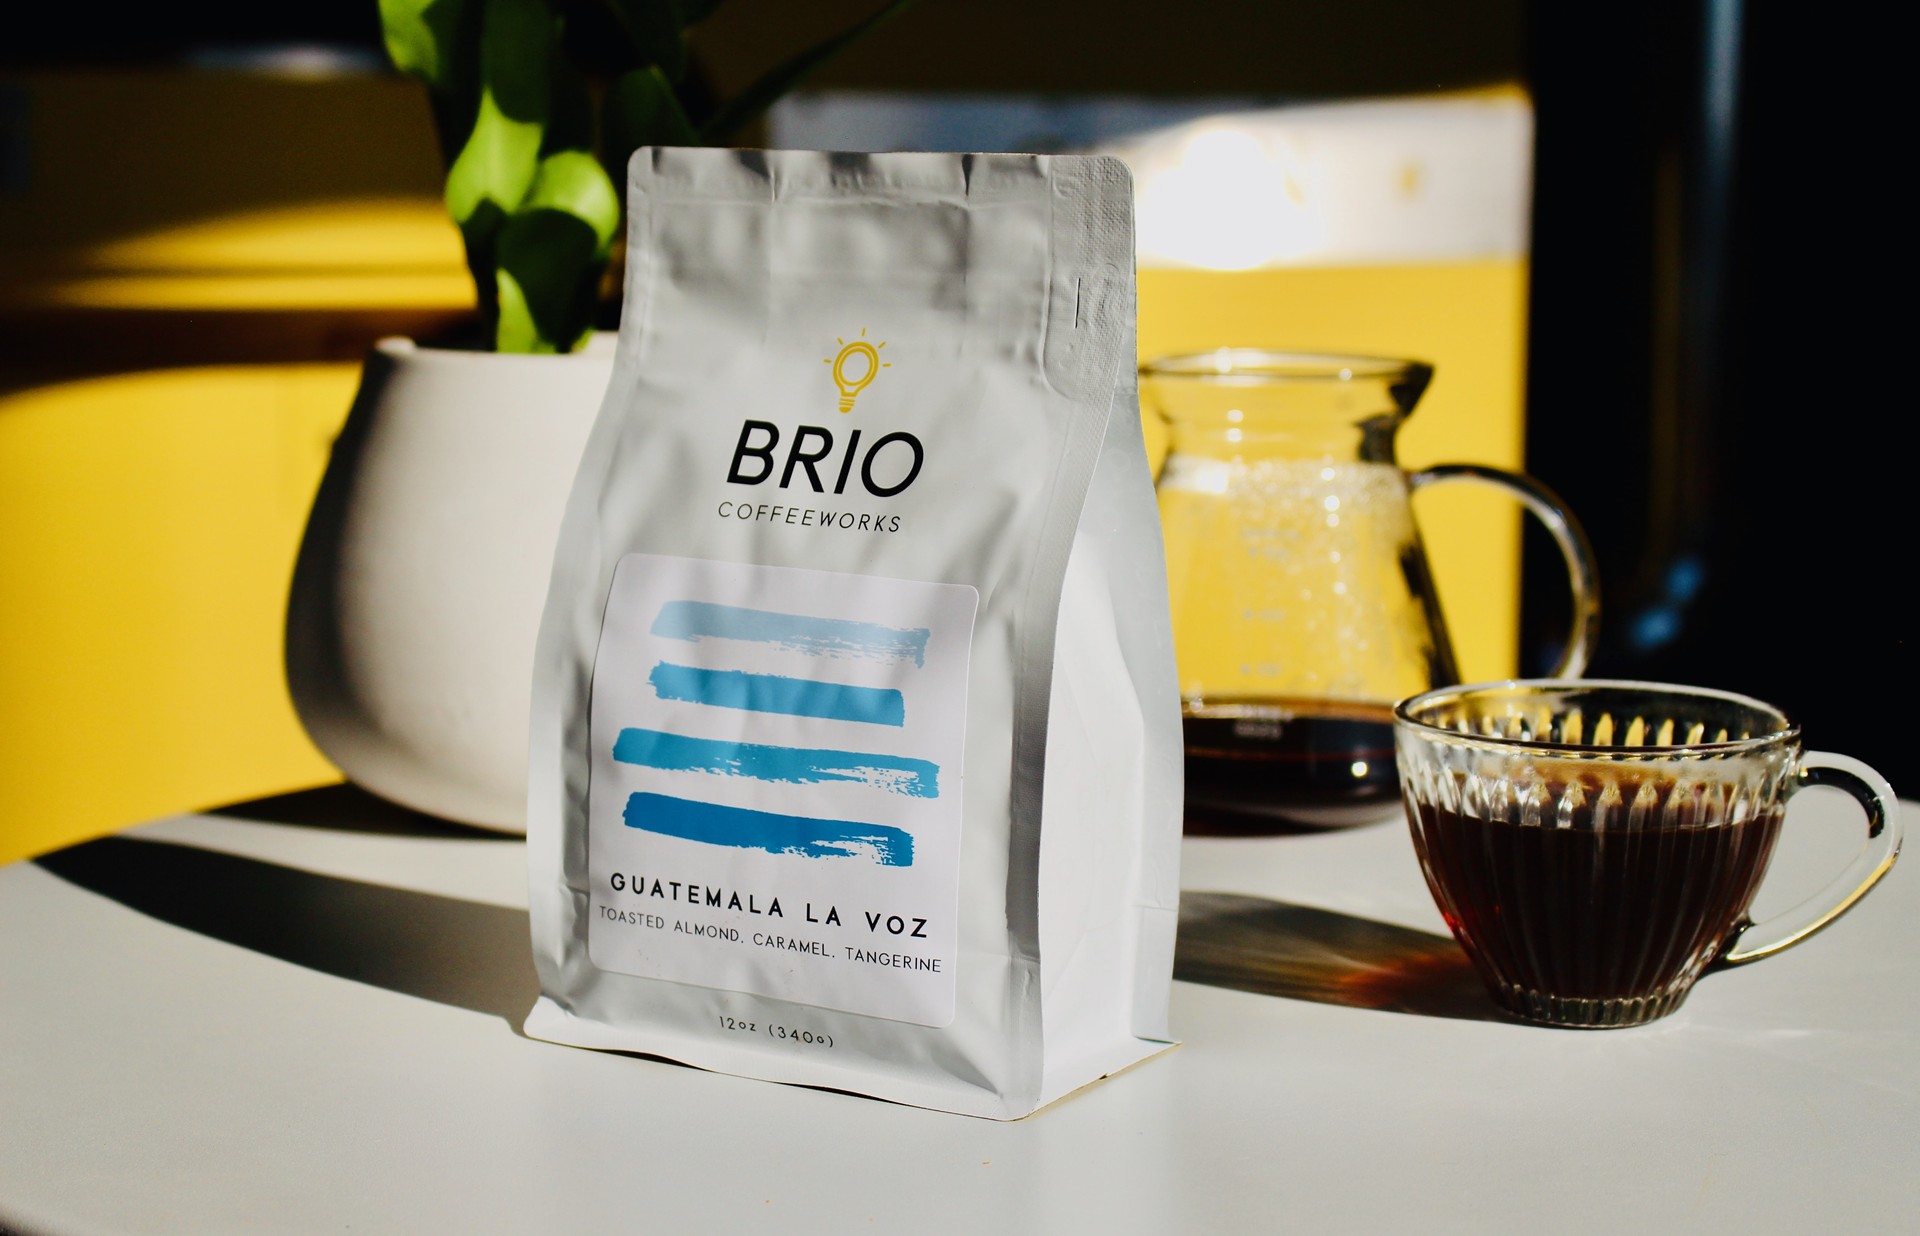 BRIO COFFEEWORKS